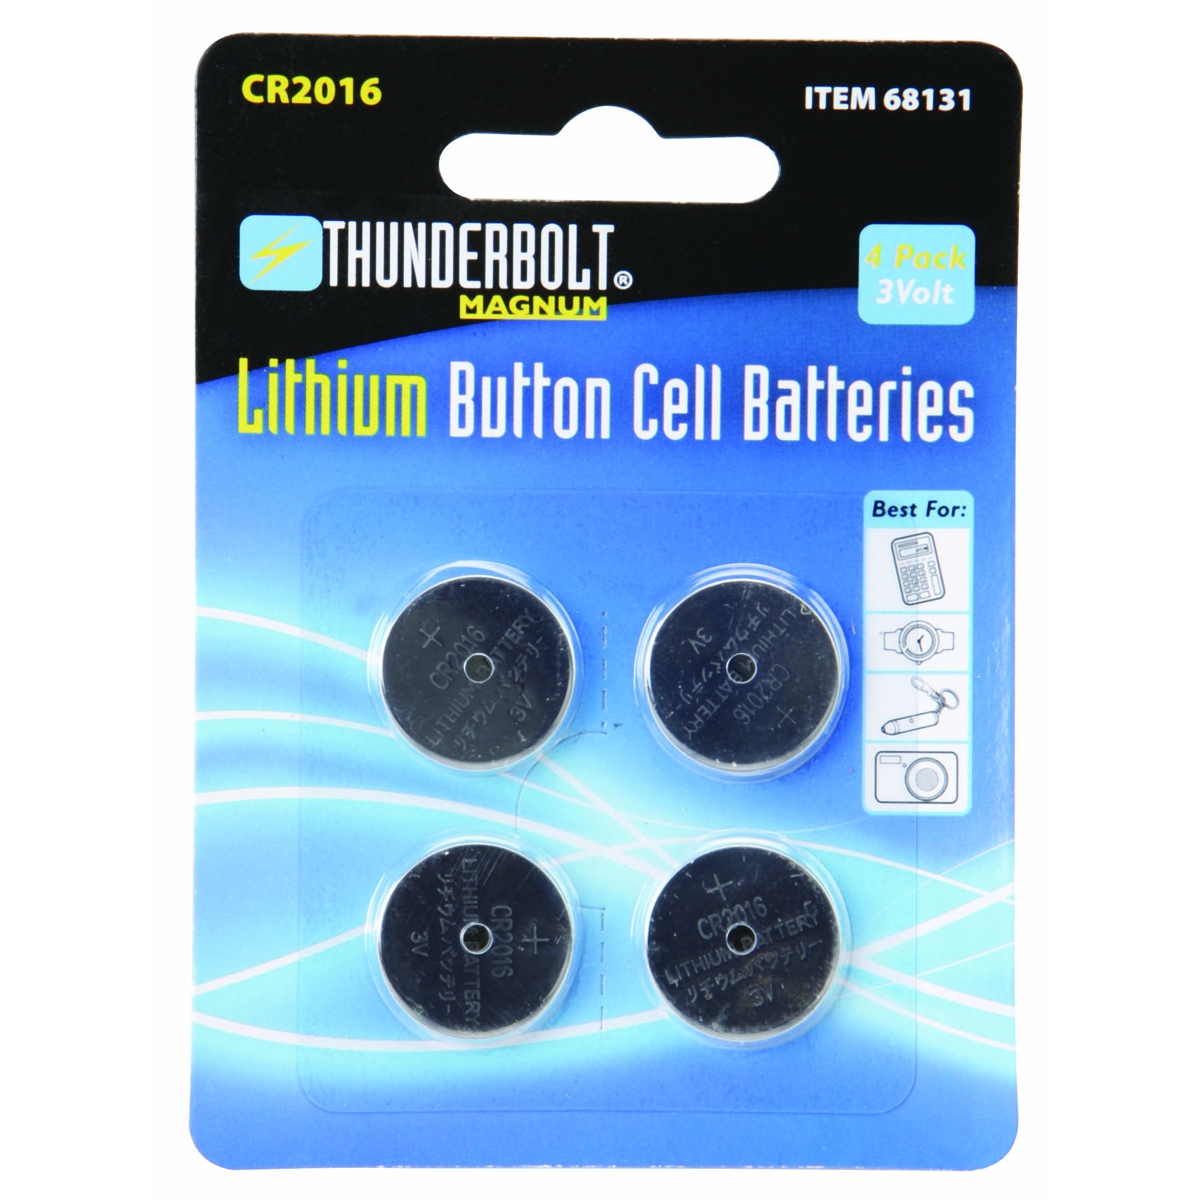 THUNDERBOLT CR2016 Lithium Button Cell Batteries 4 Pk. - Item 68131